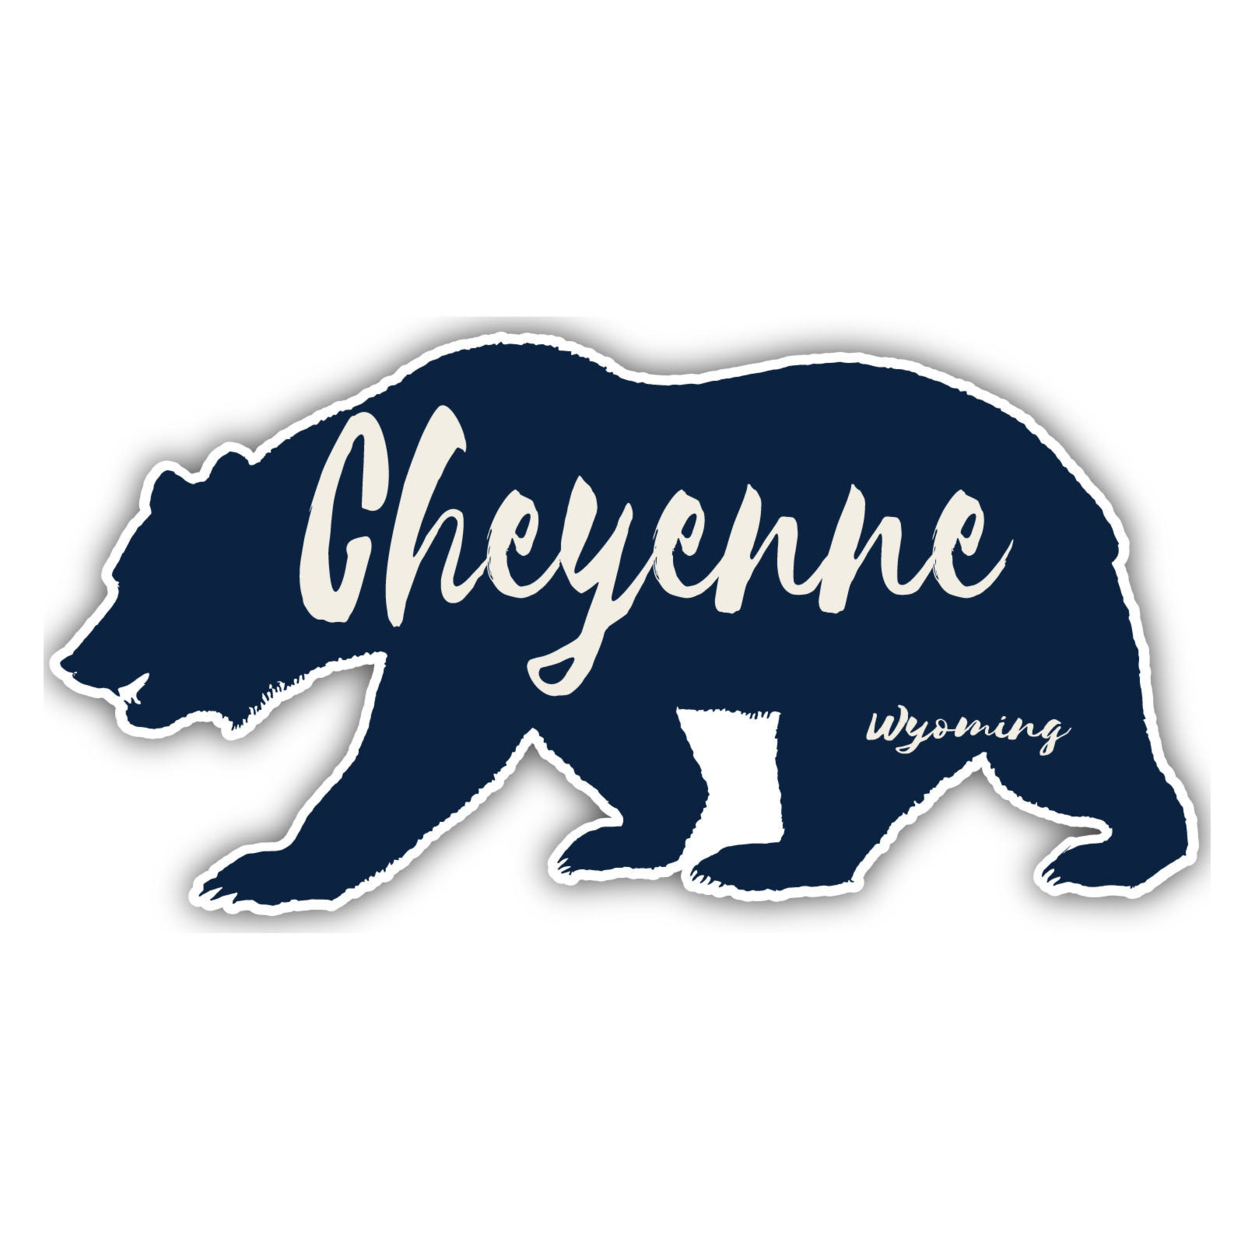 Cheyenne Wyoming Souvenir Decorative Stickers (Choose Theme And Size) - Single Unit, 2-Inch, Bear